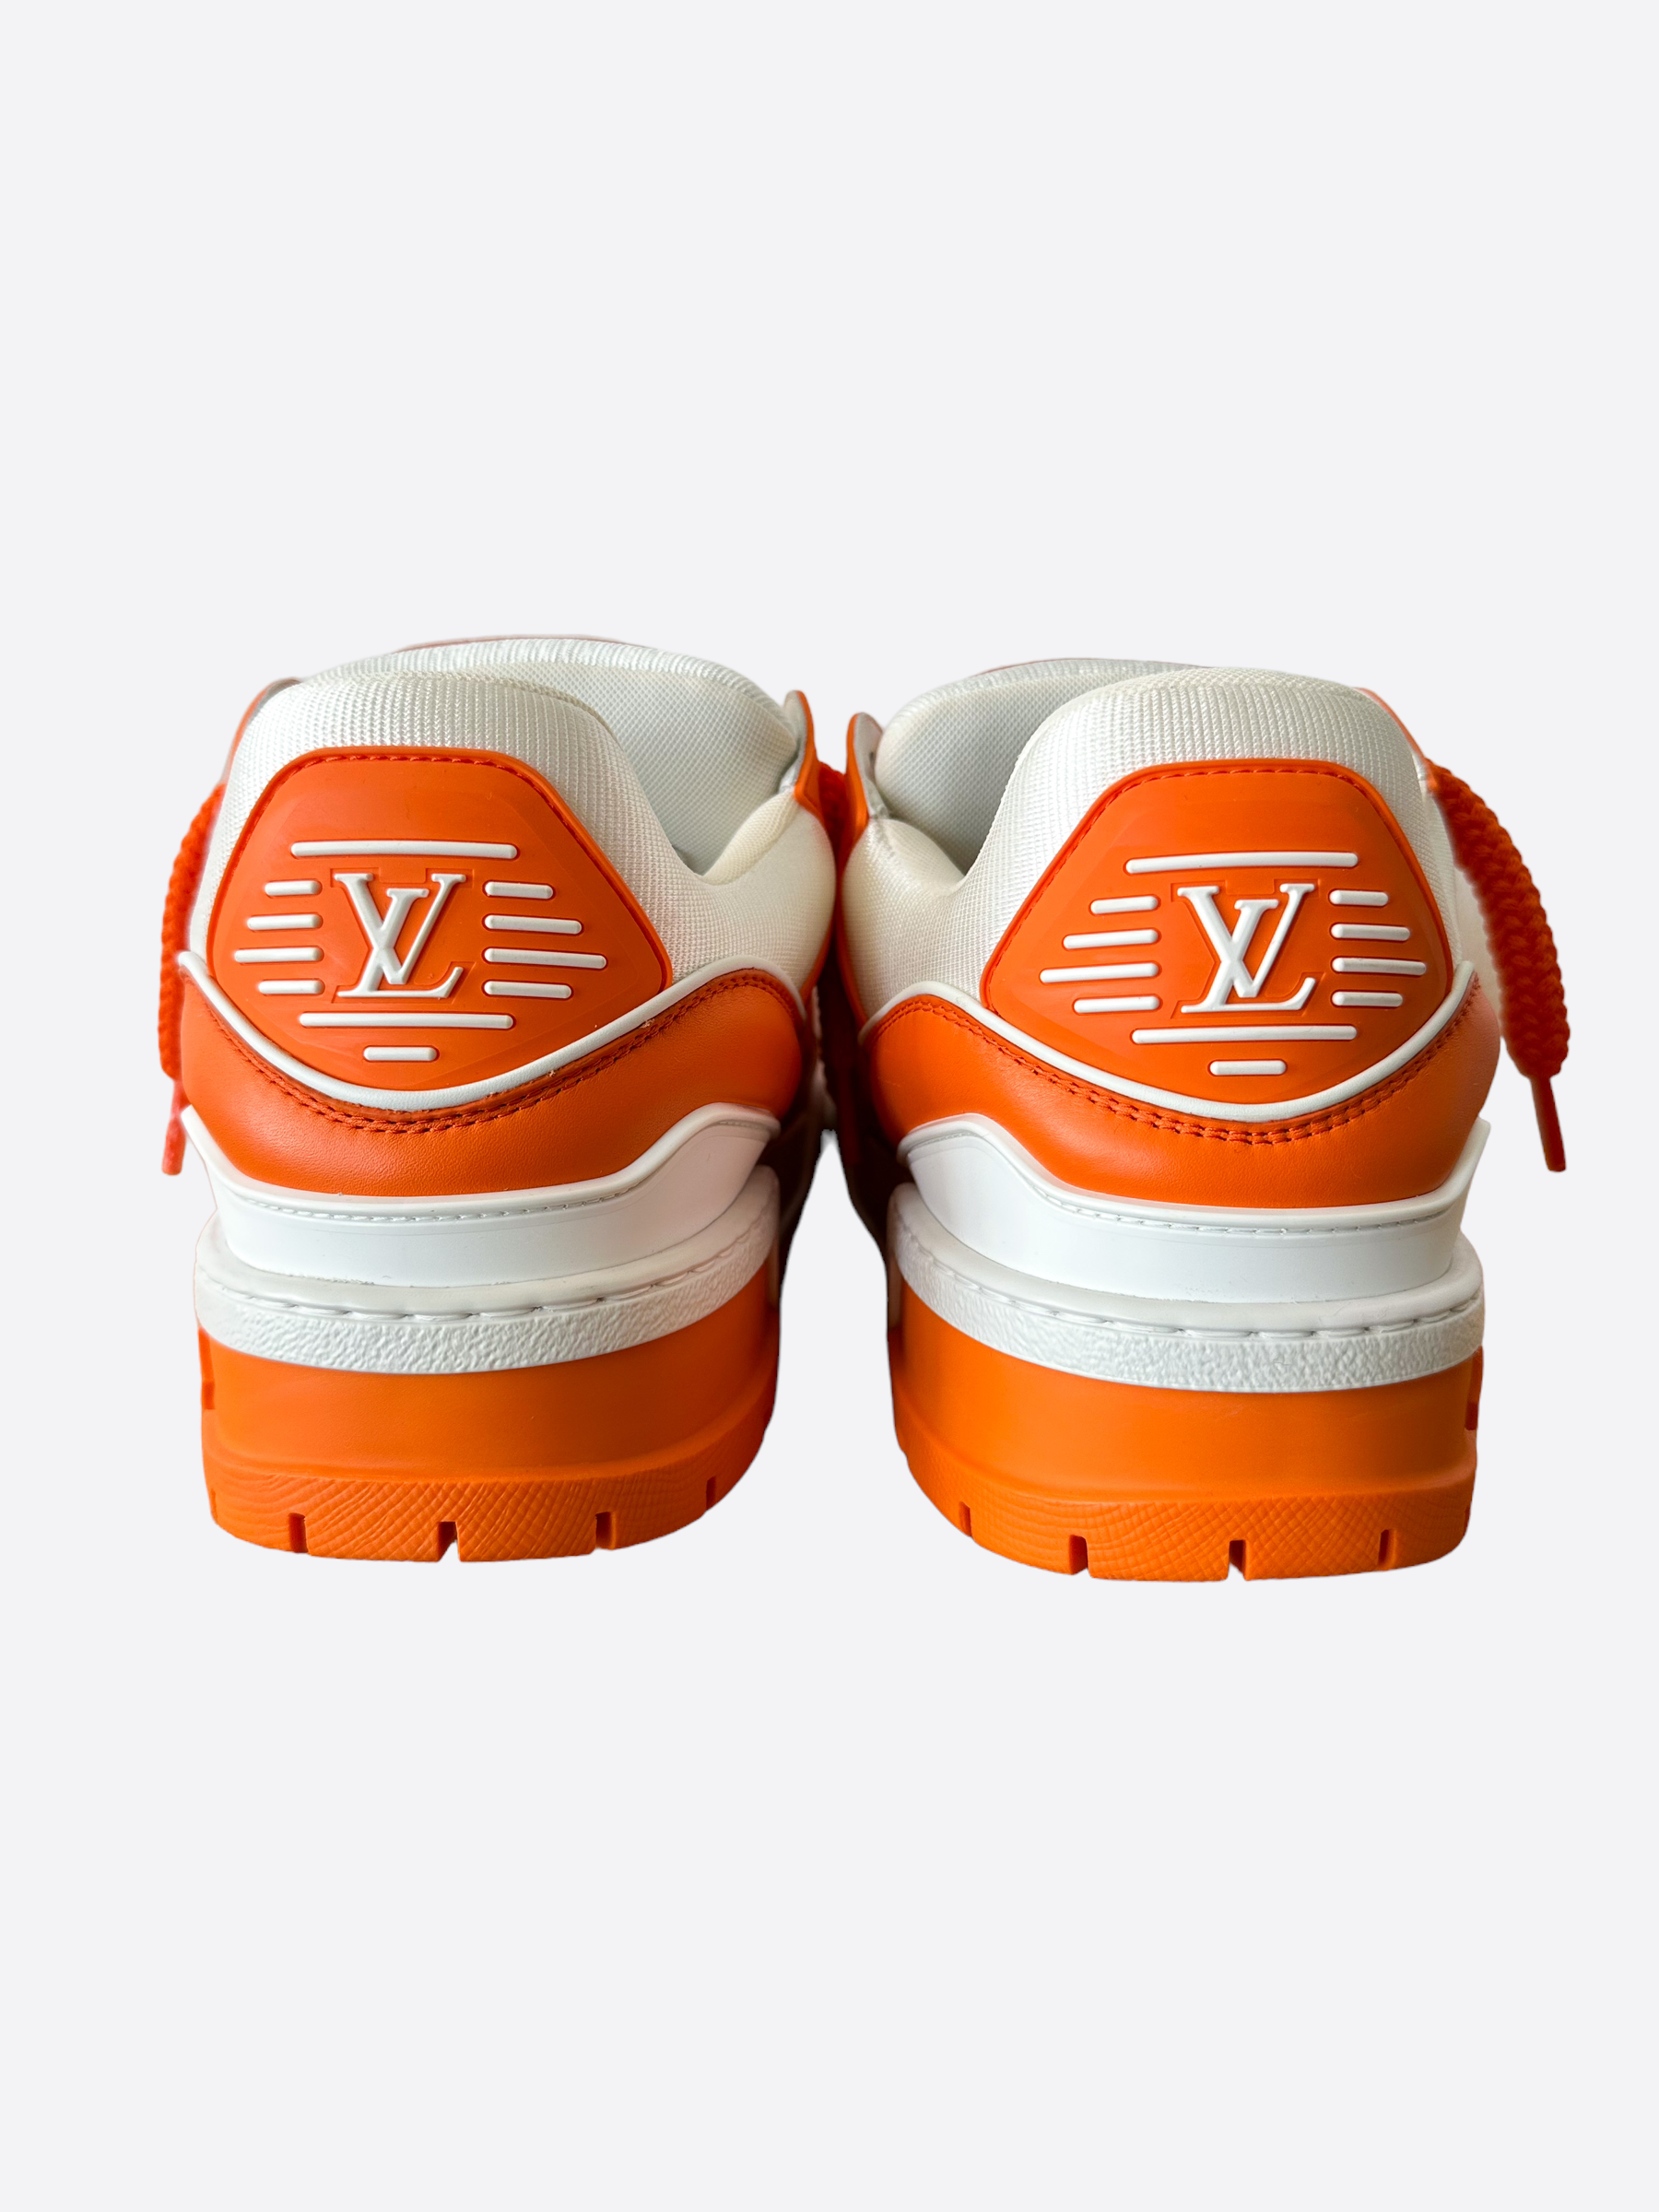 Louis Vuitton LV Trainer Orange